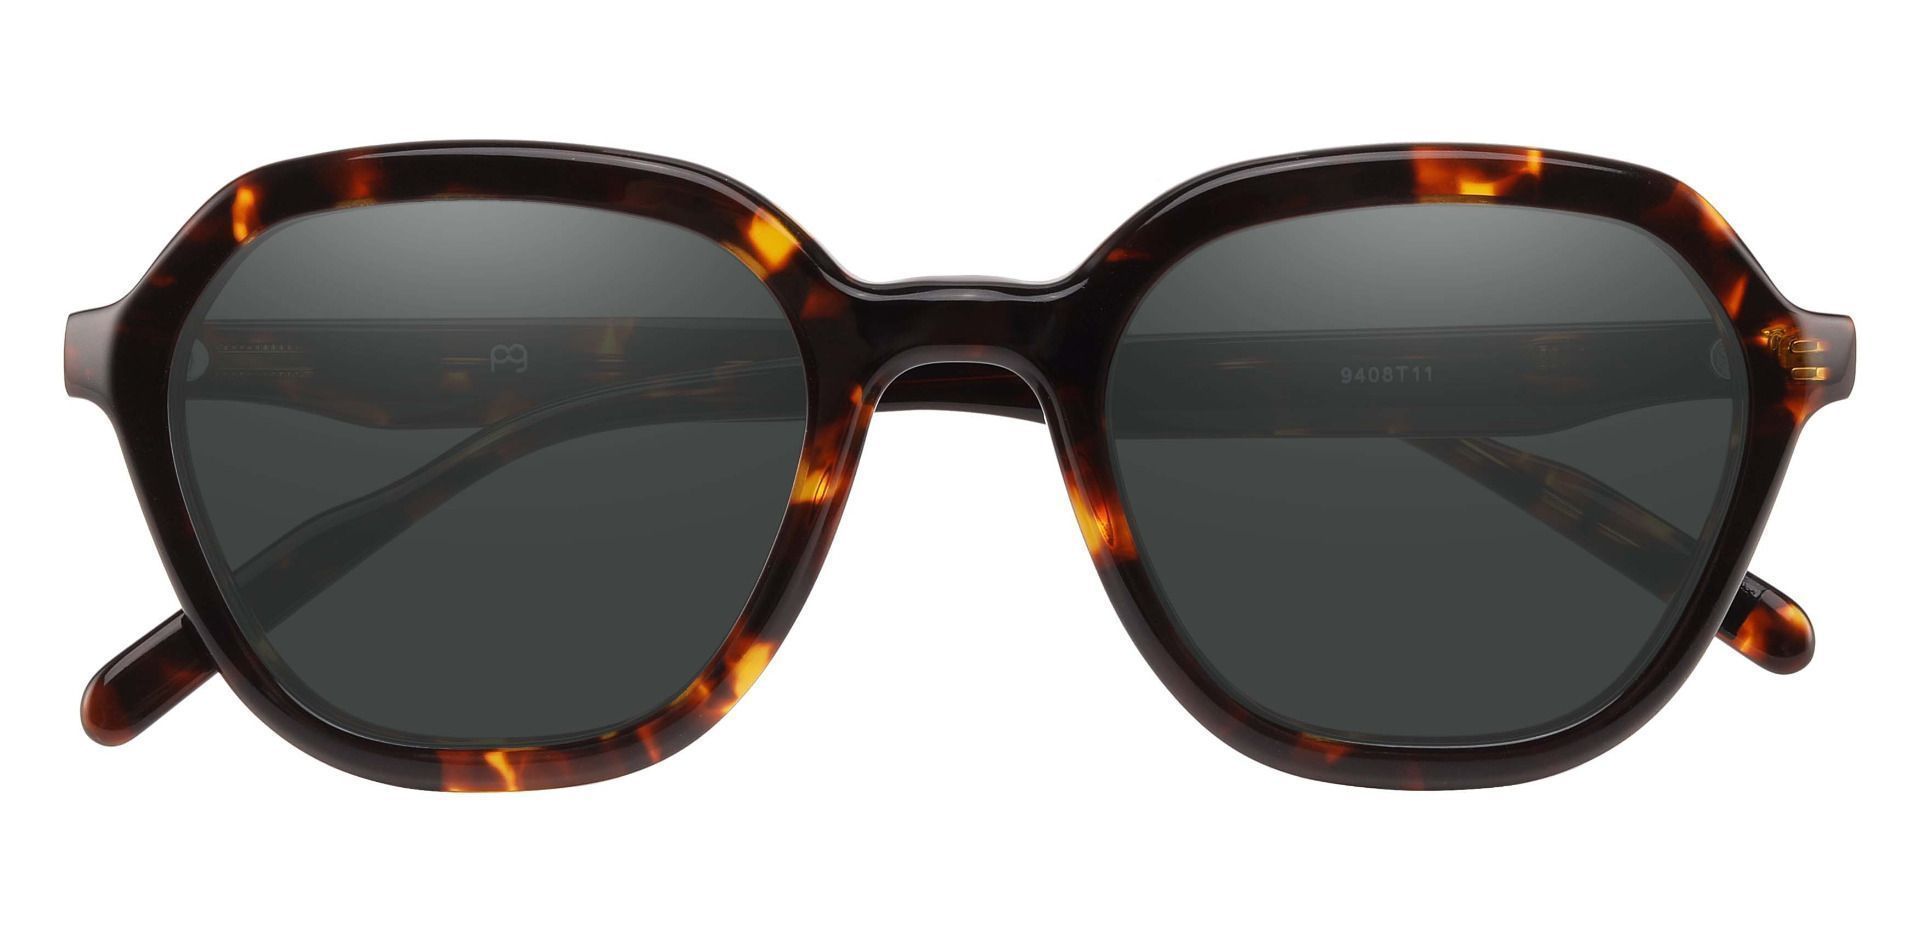 Mandarin Geometric Prescription Sunglasses - Tortoise Frame With Gray ...